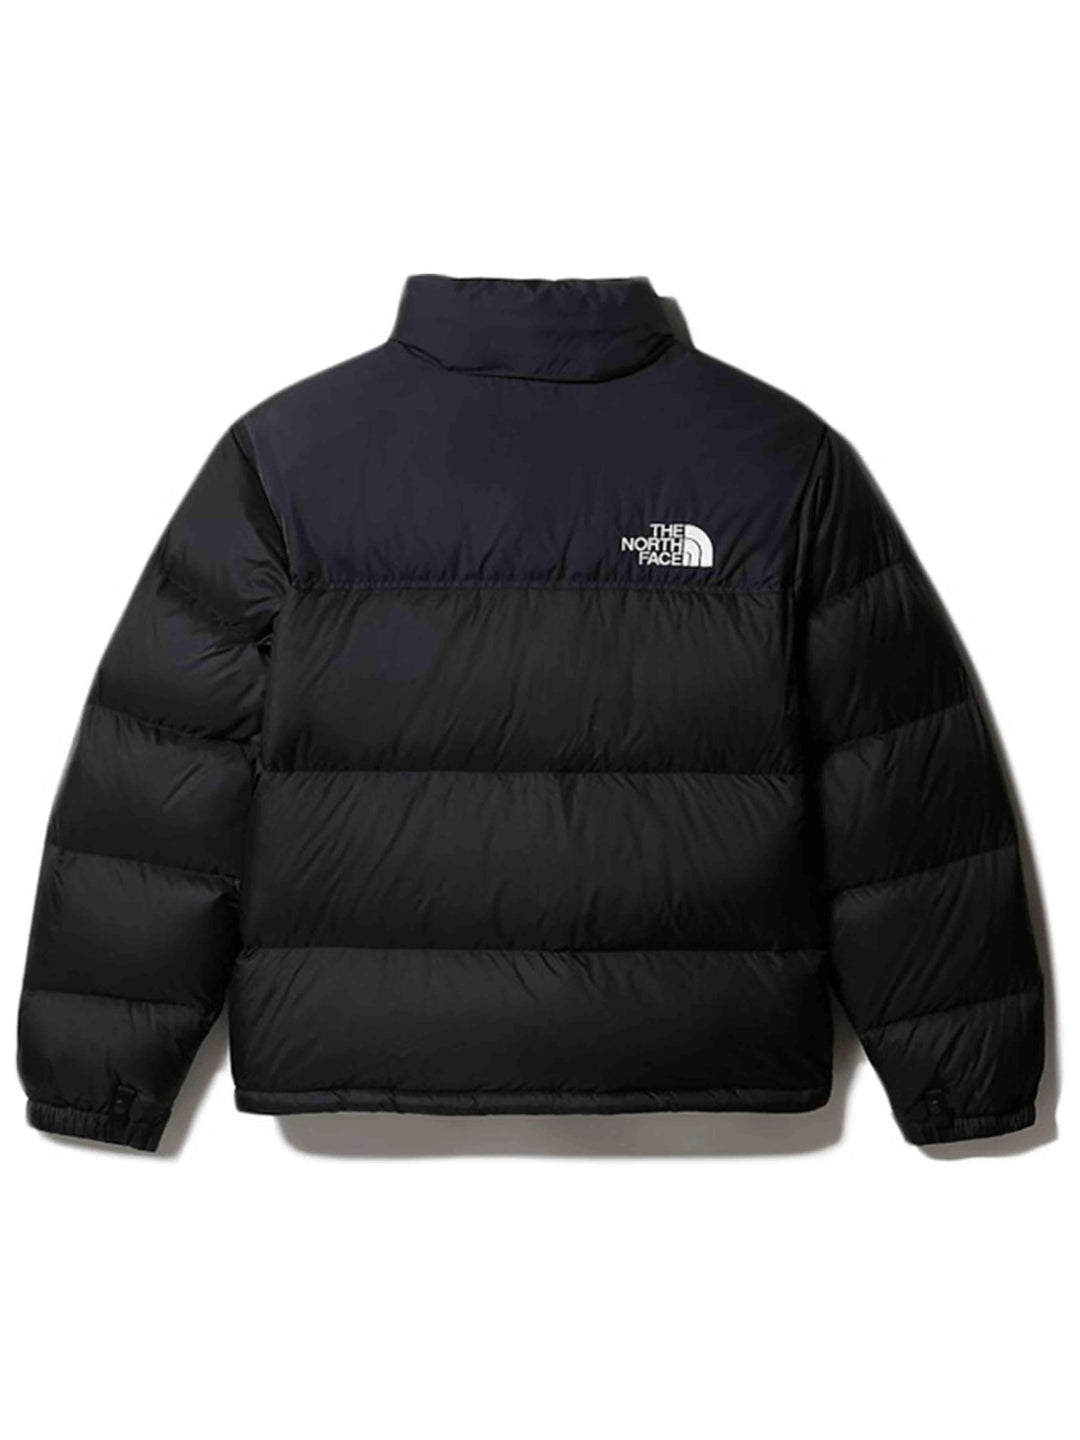 The North Face 1996 Retro Nuptse Packable Jacket Black Prior